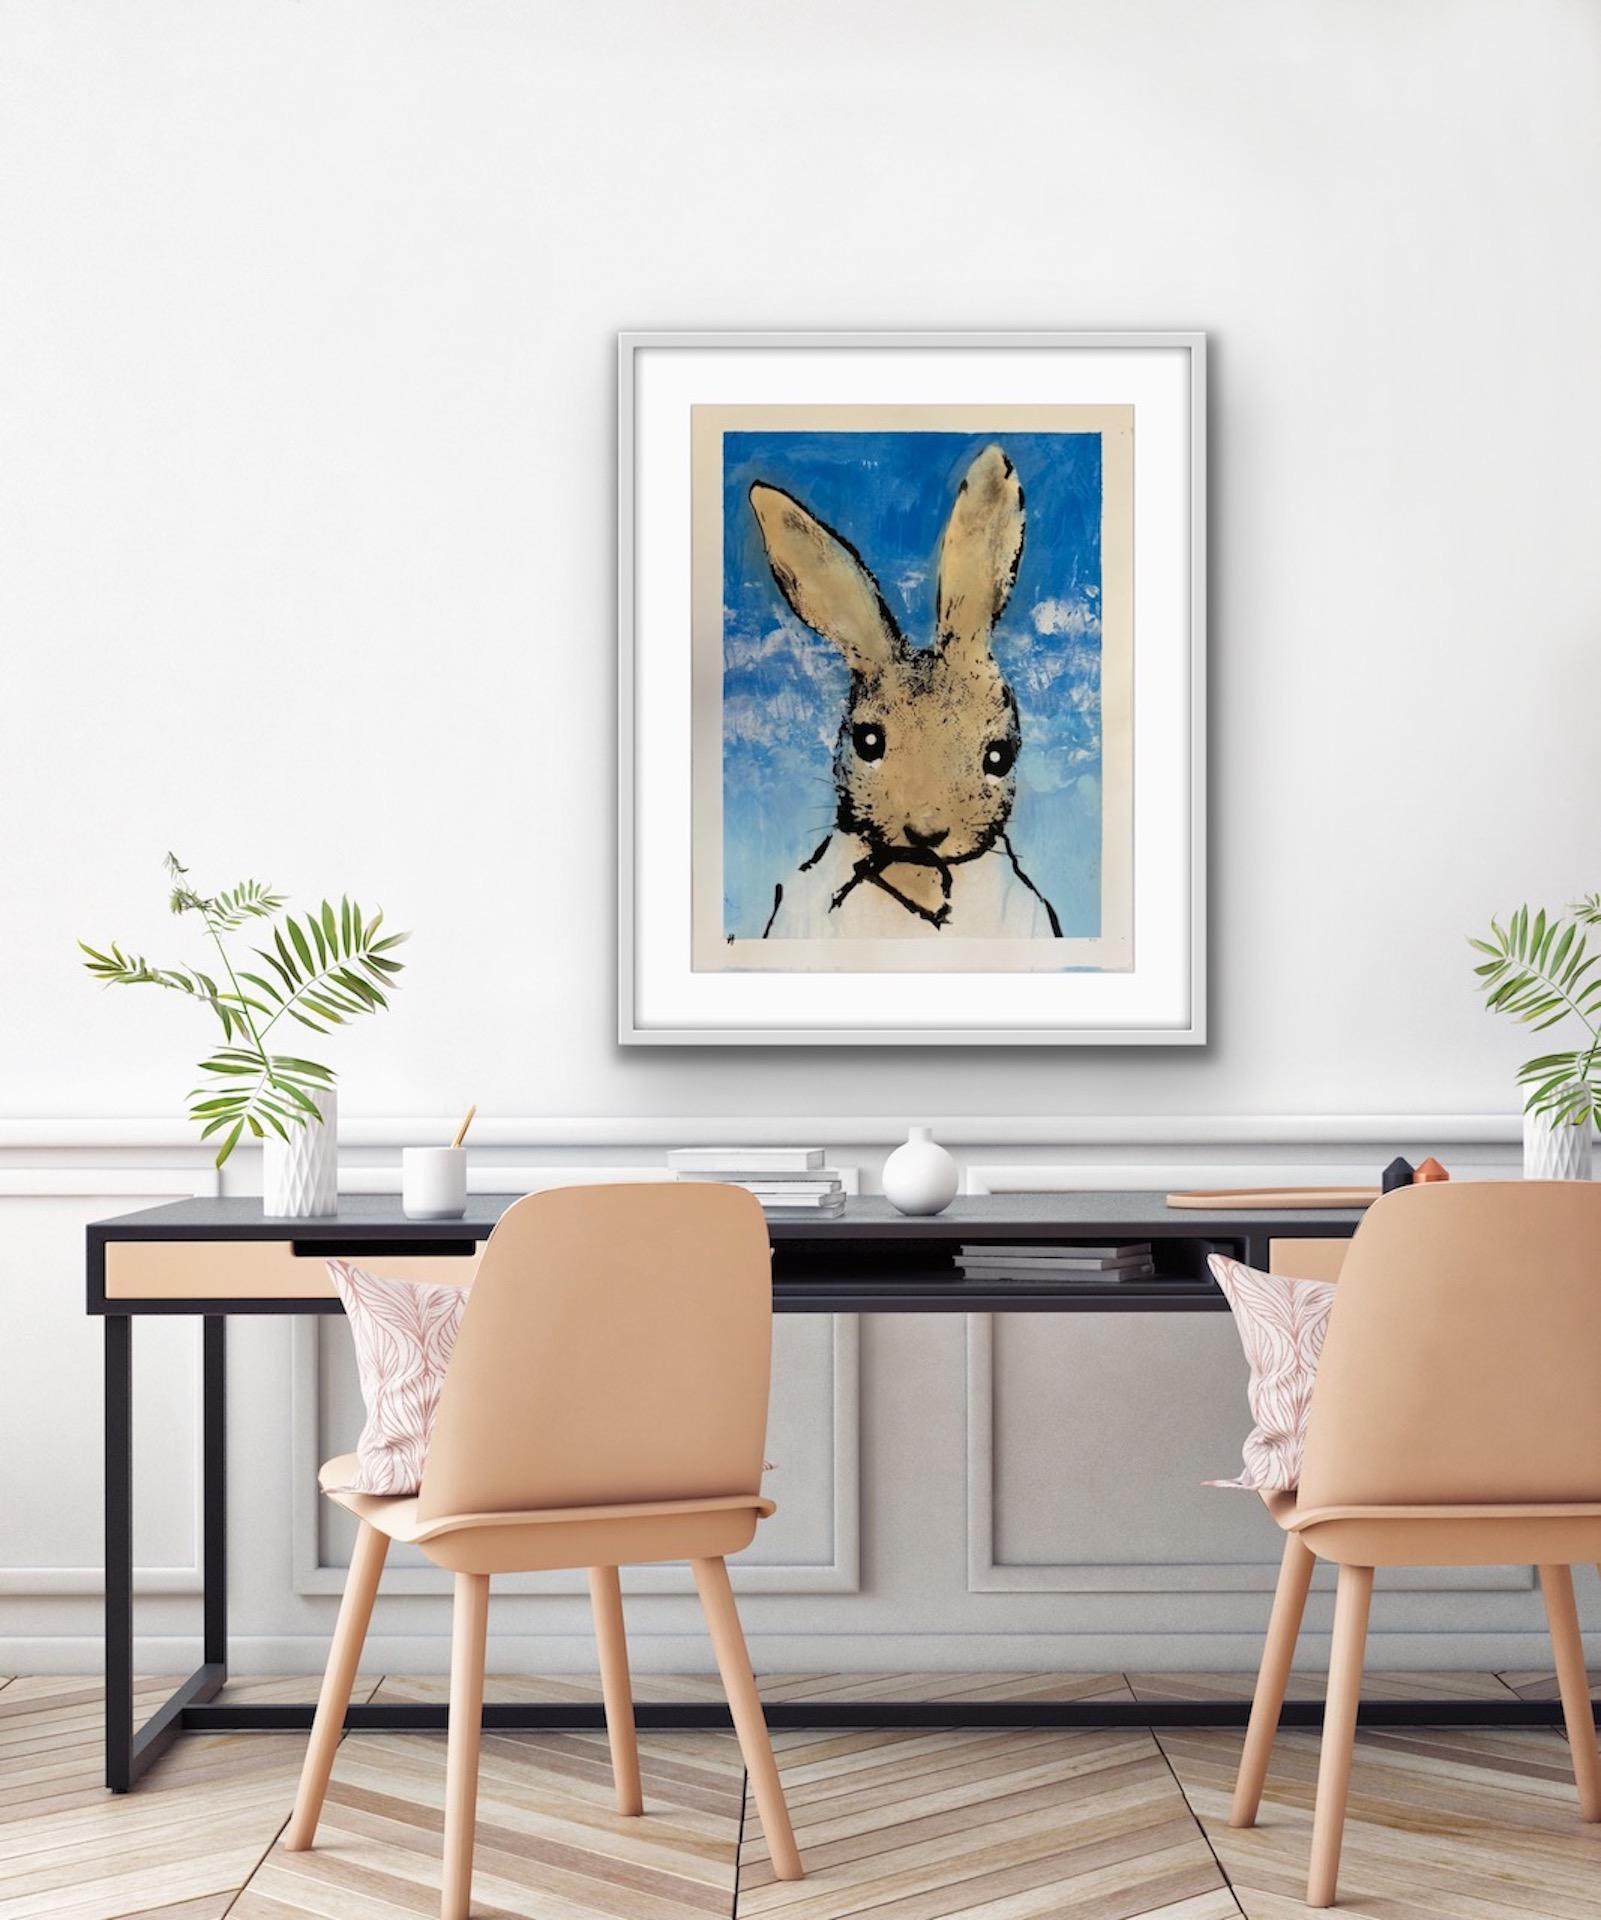 Harry Bunce, Sorry #122, Affordable Contemporary Art, Rabbit Art, Art Online 5